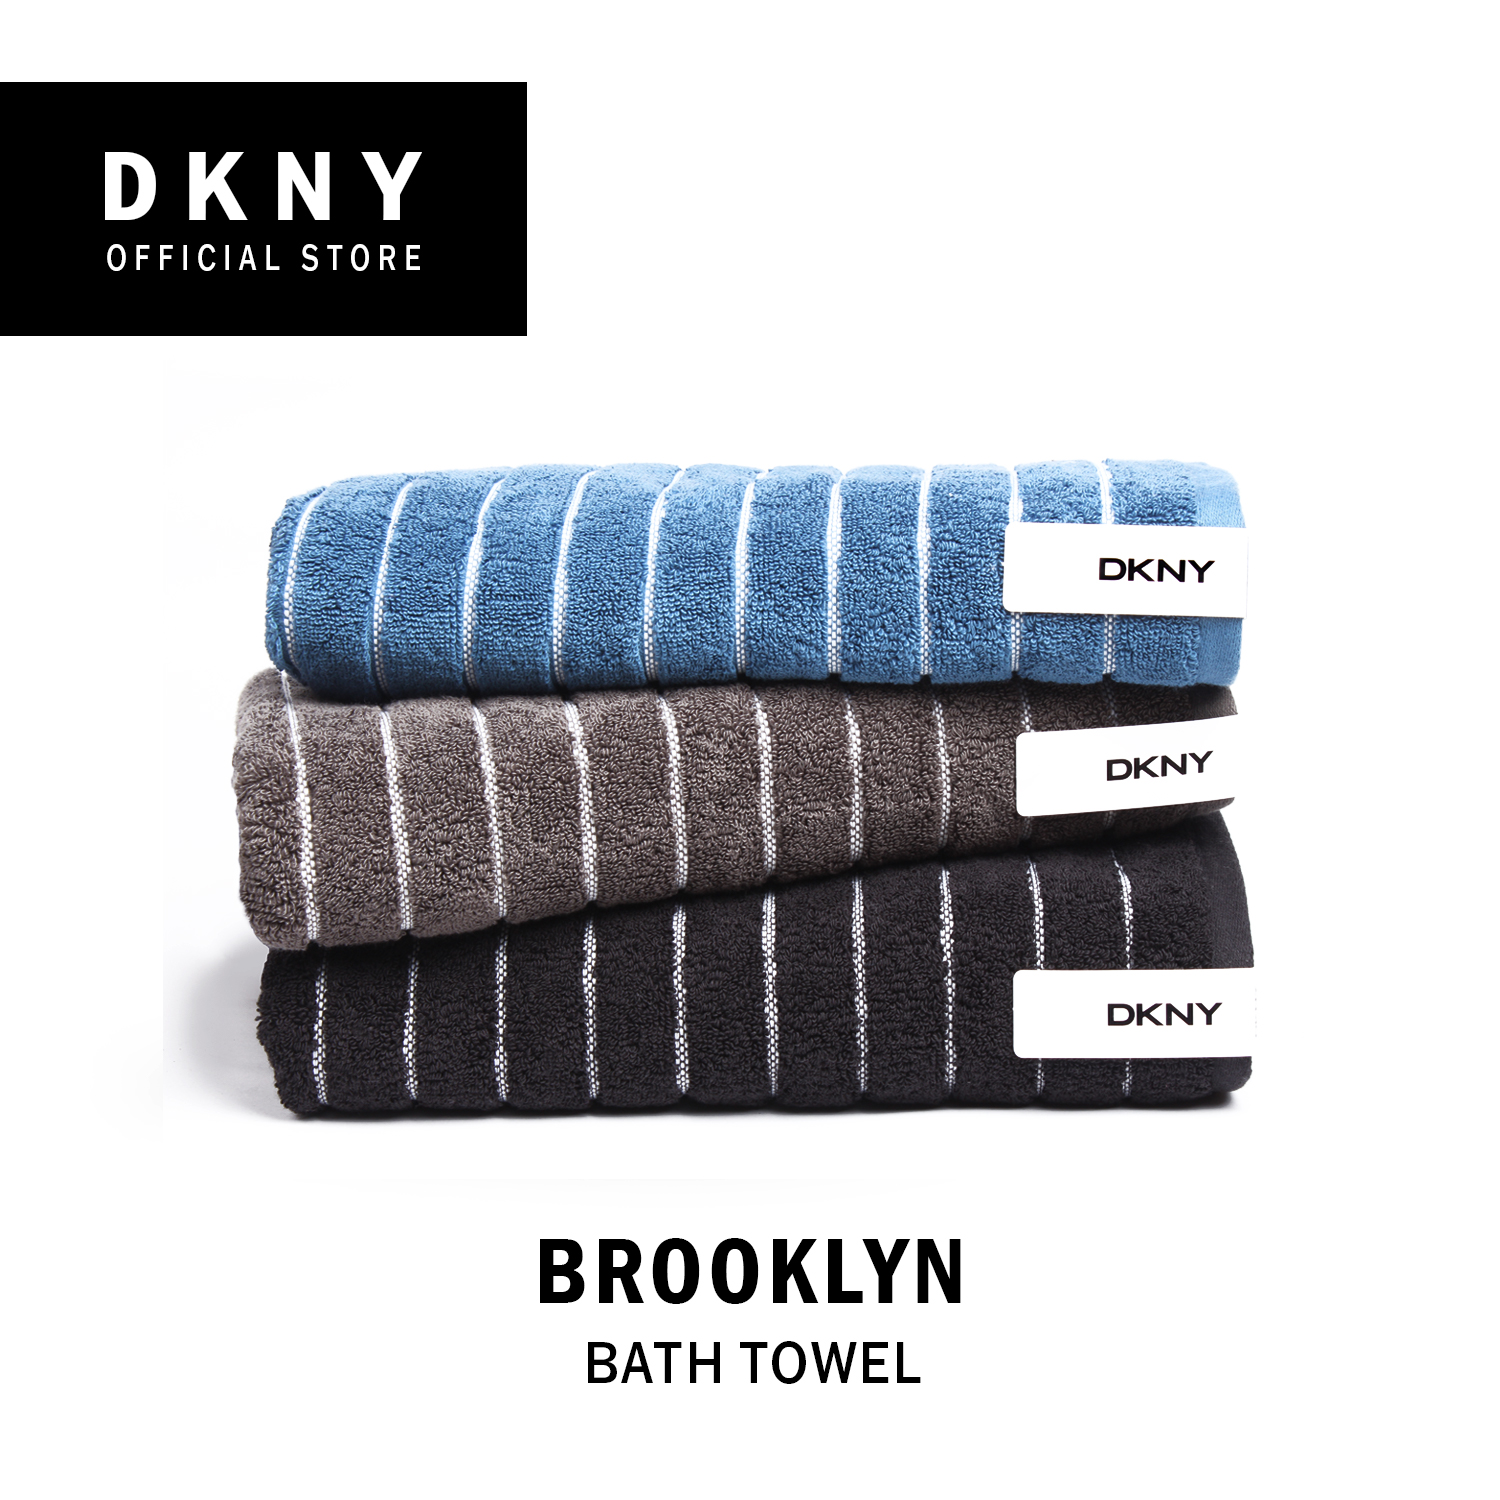 DKNY Bath Towels